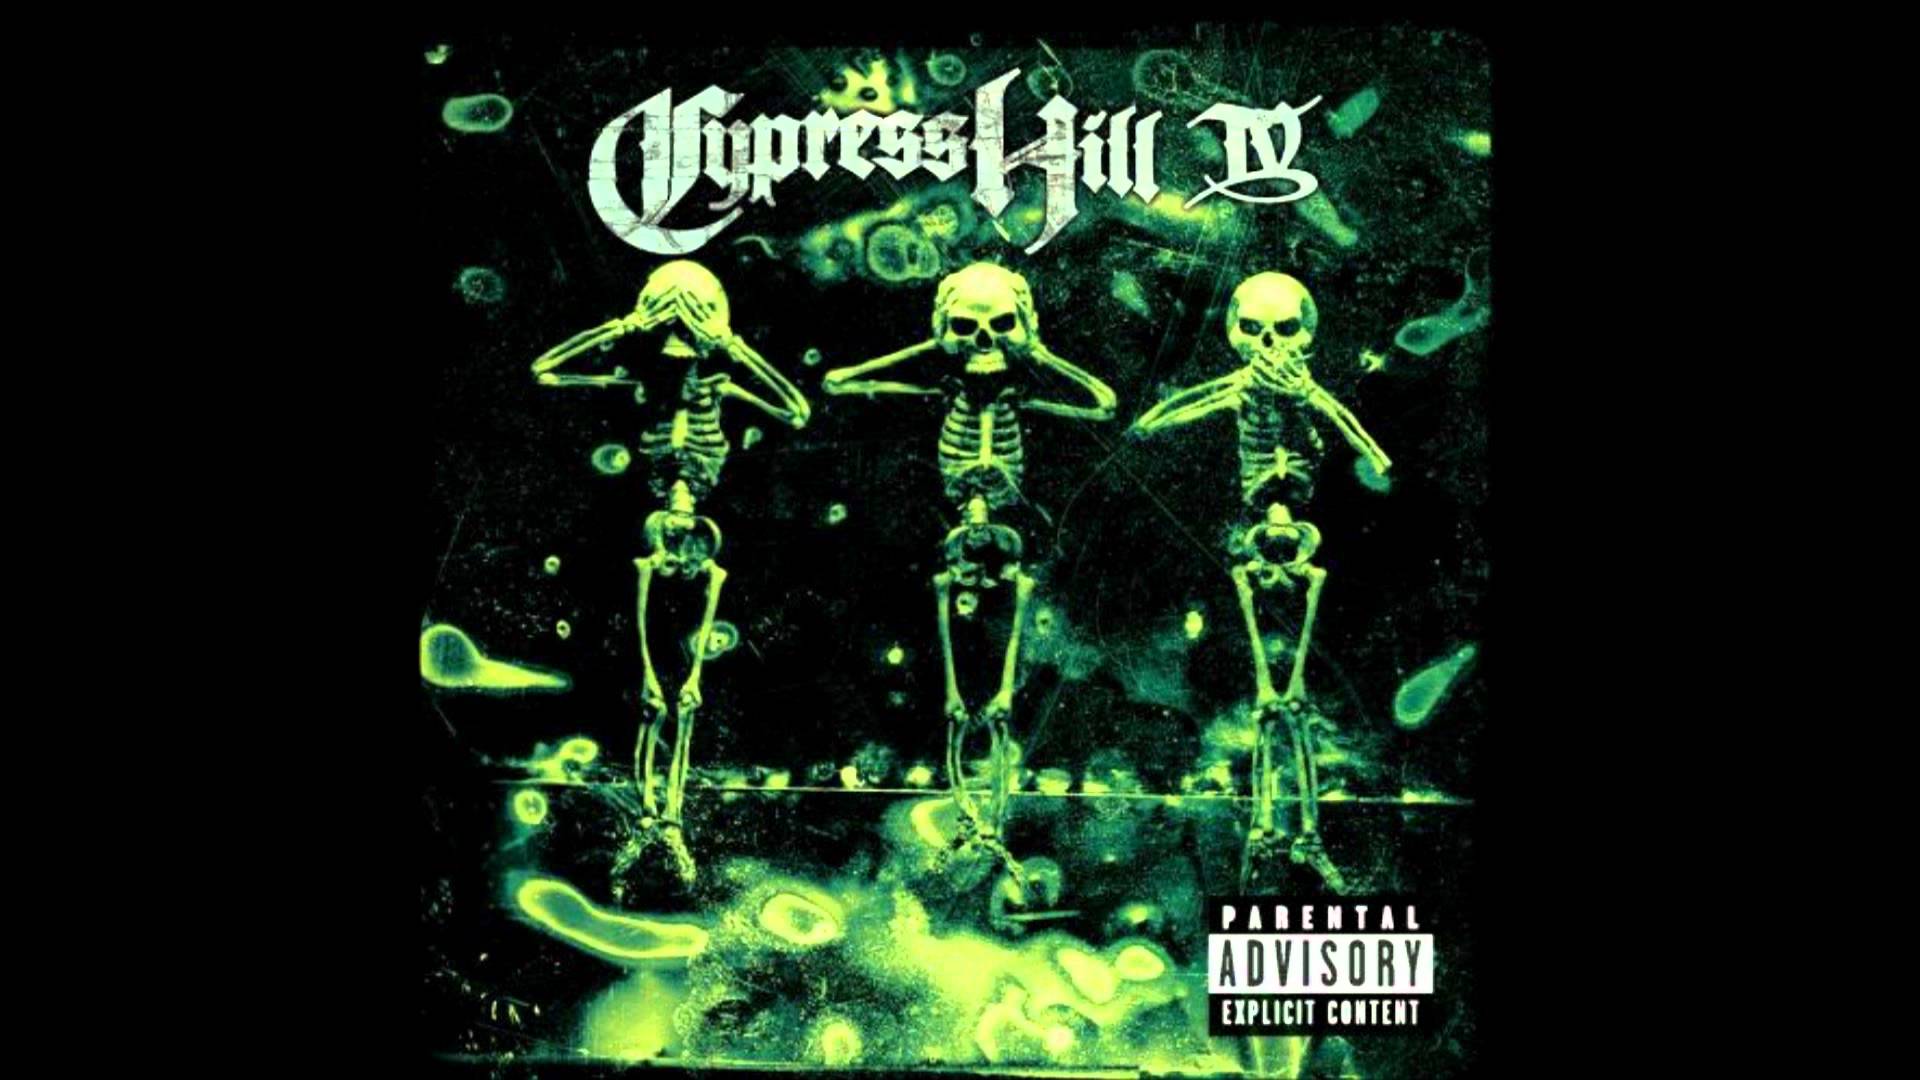 Cypress Hill BandsPapel de paredes Free Papel de paredes música Papel de  parede Logo foto compartilhado por Syd  Português de partilha de imagens  imagens